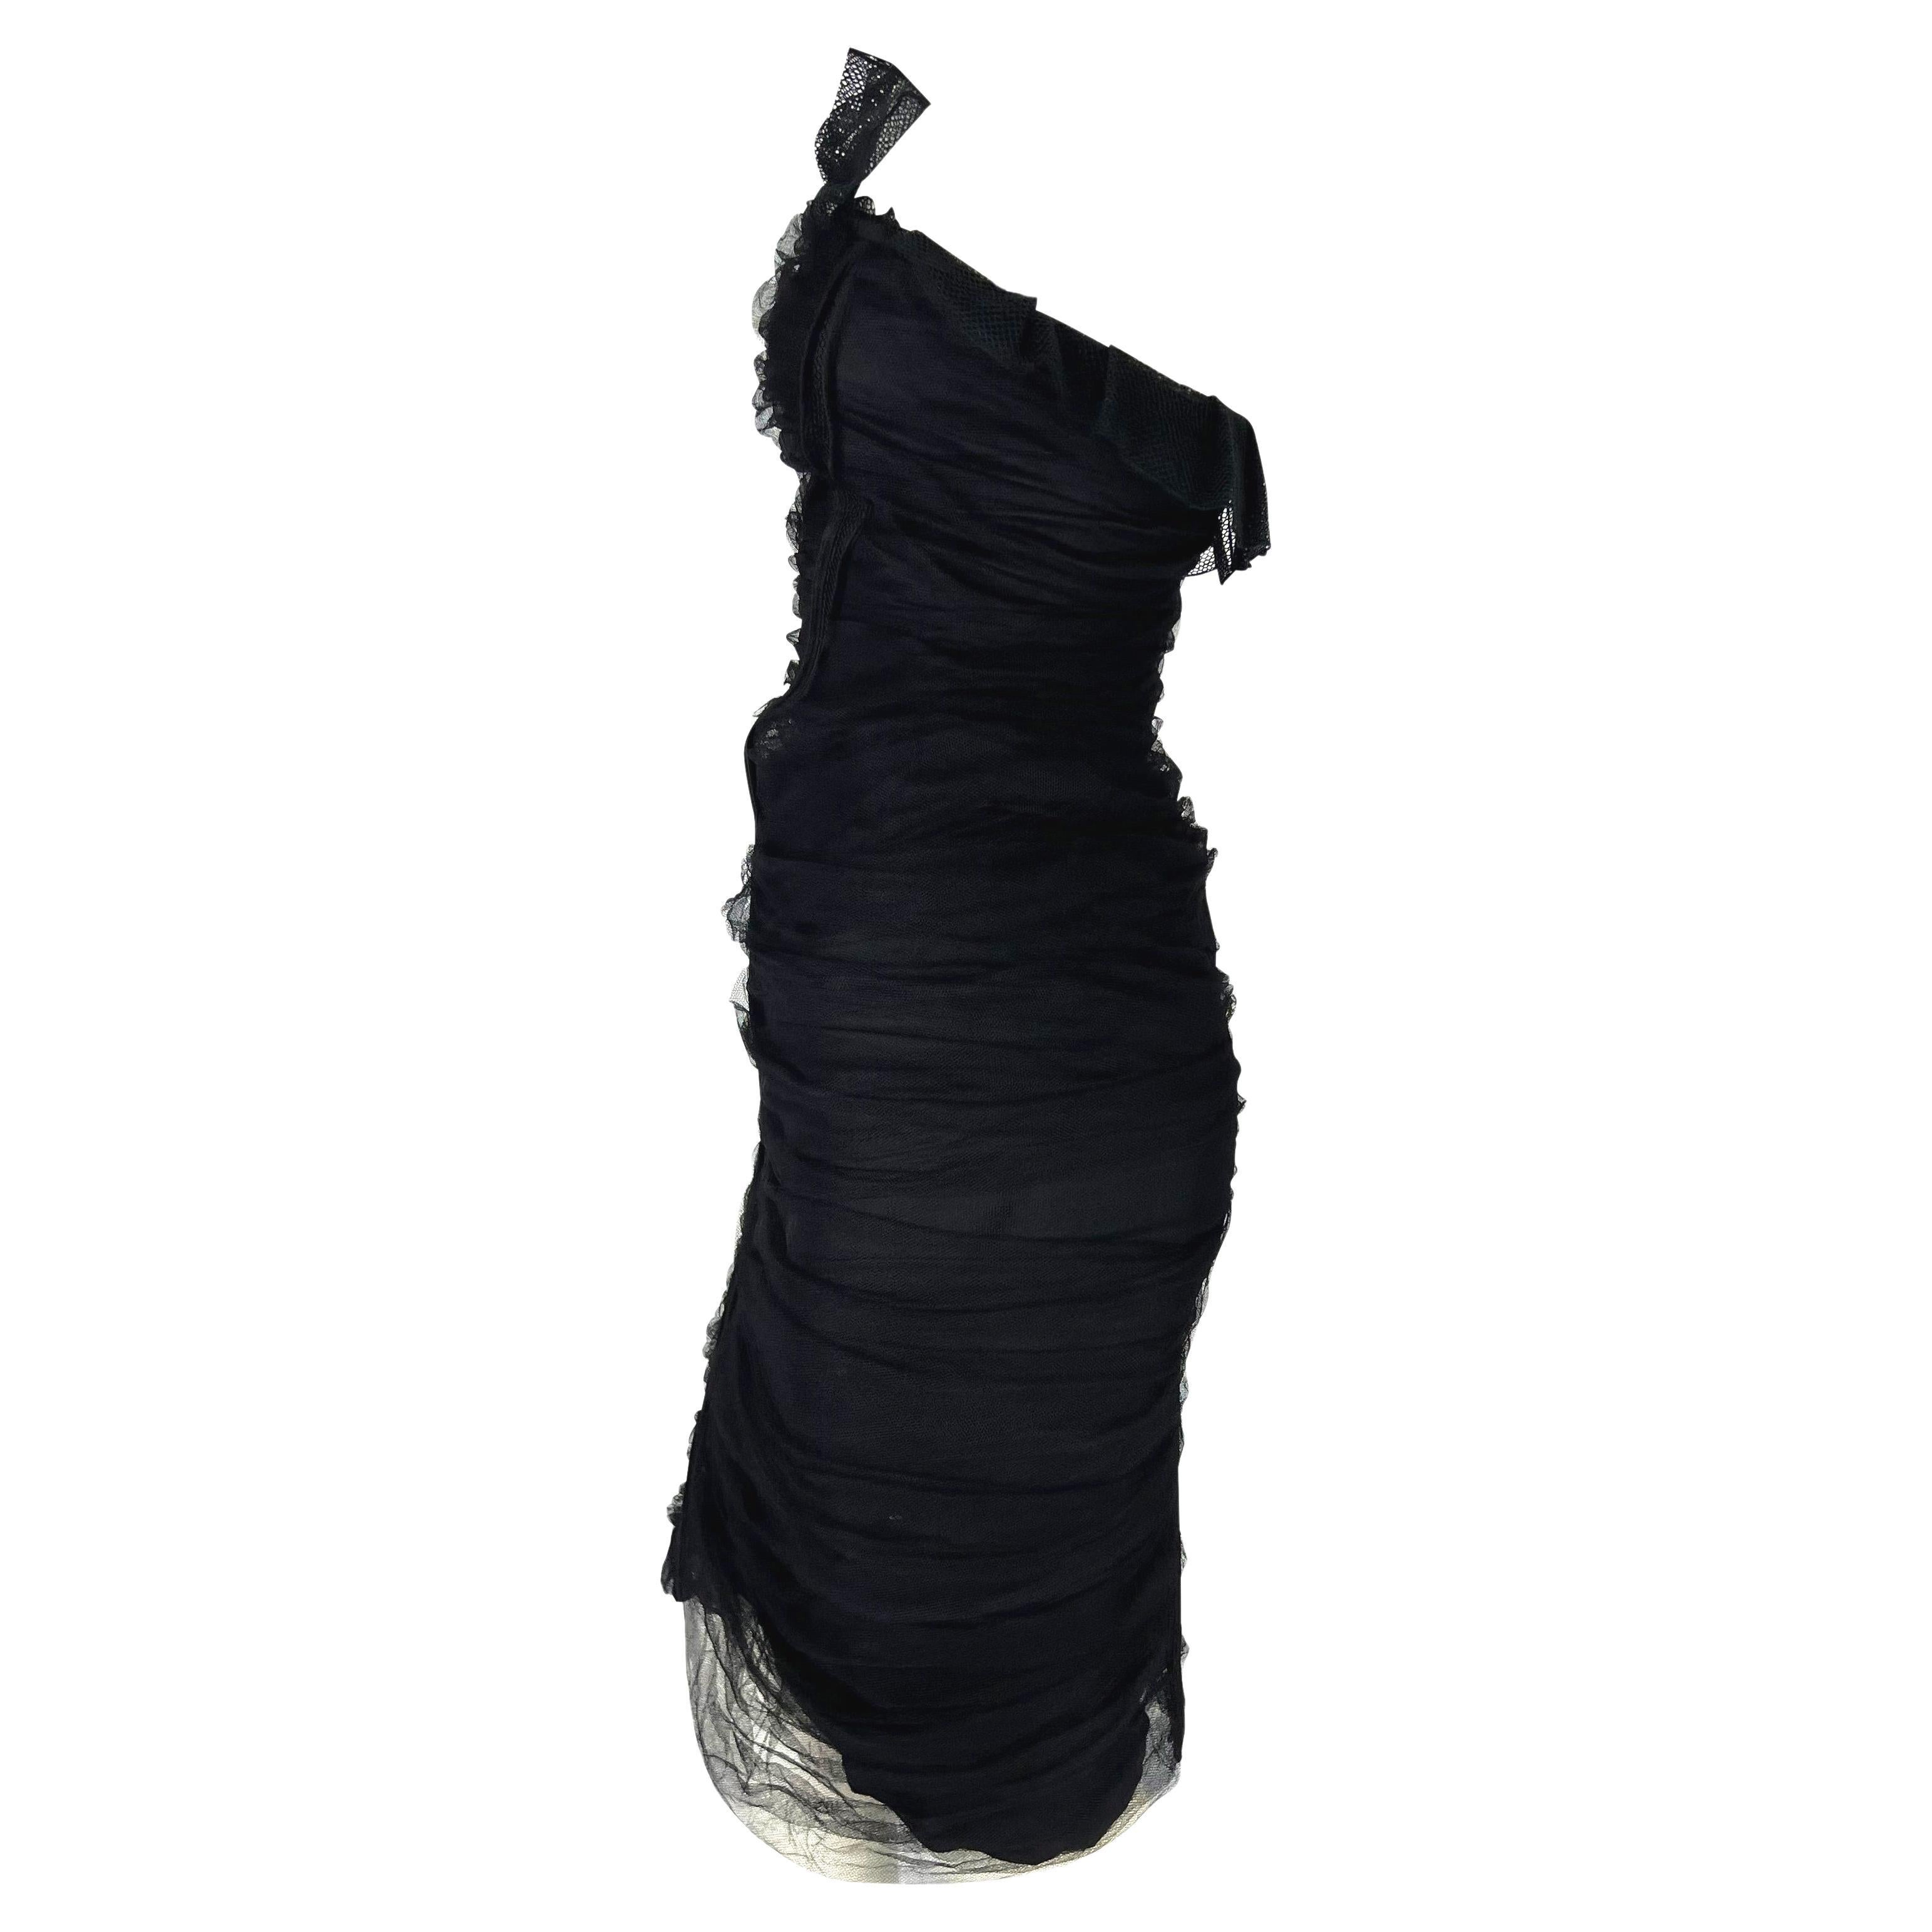 black dress with net overlay